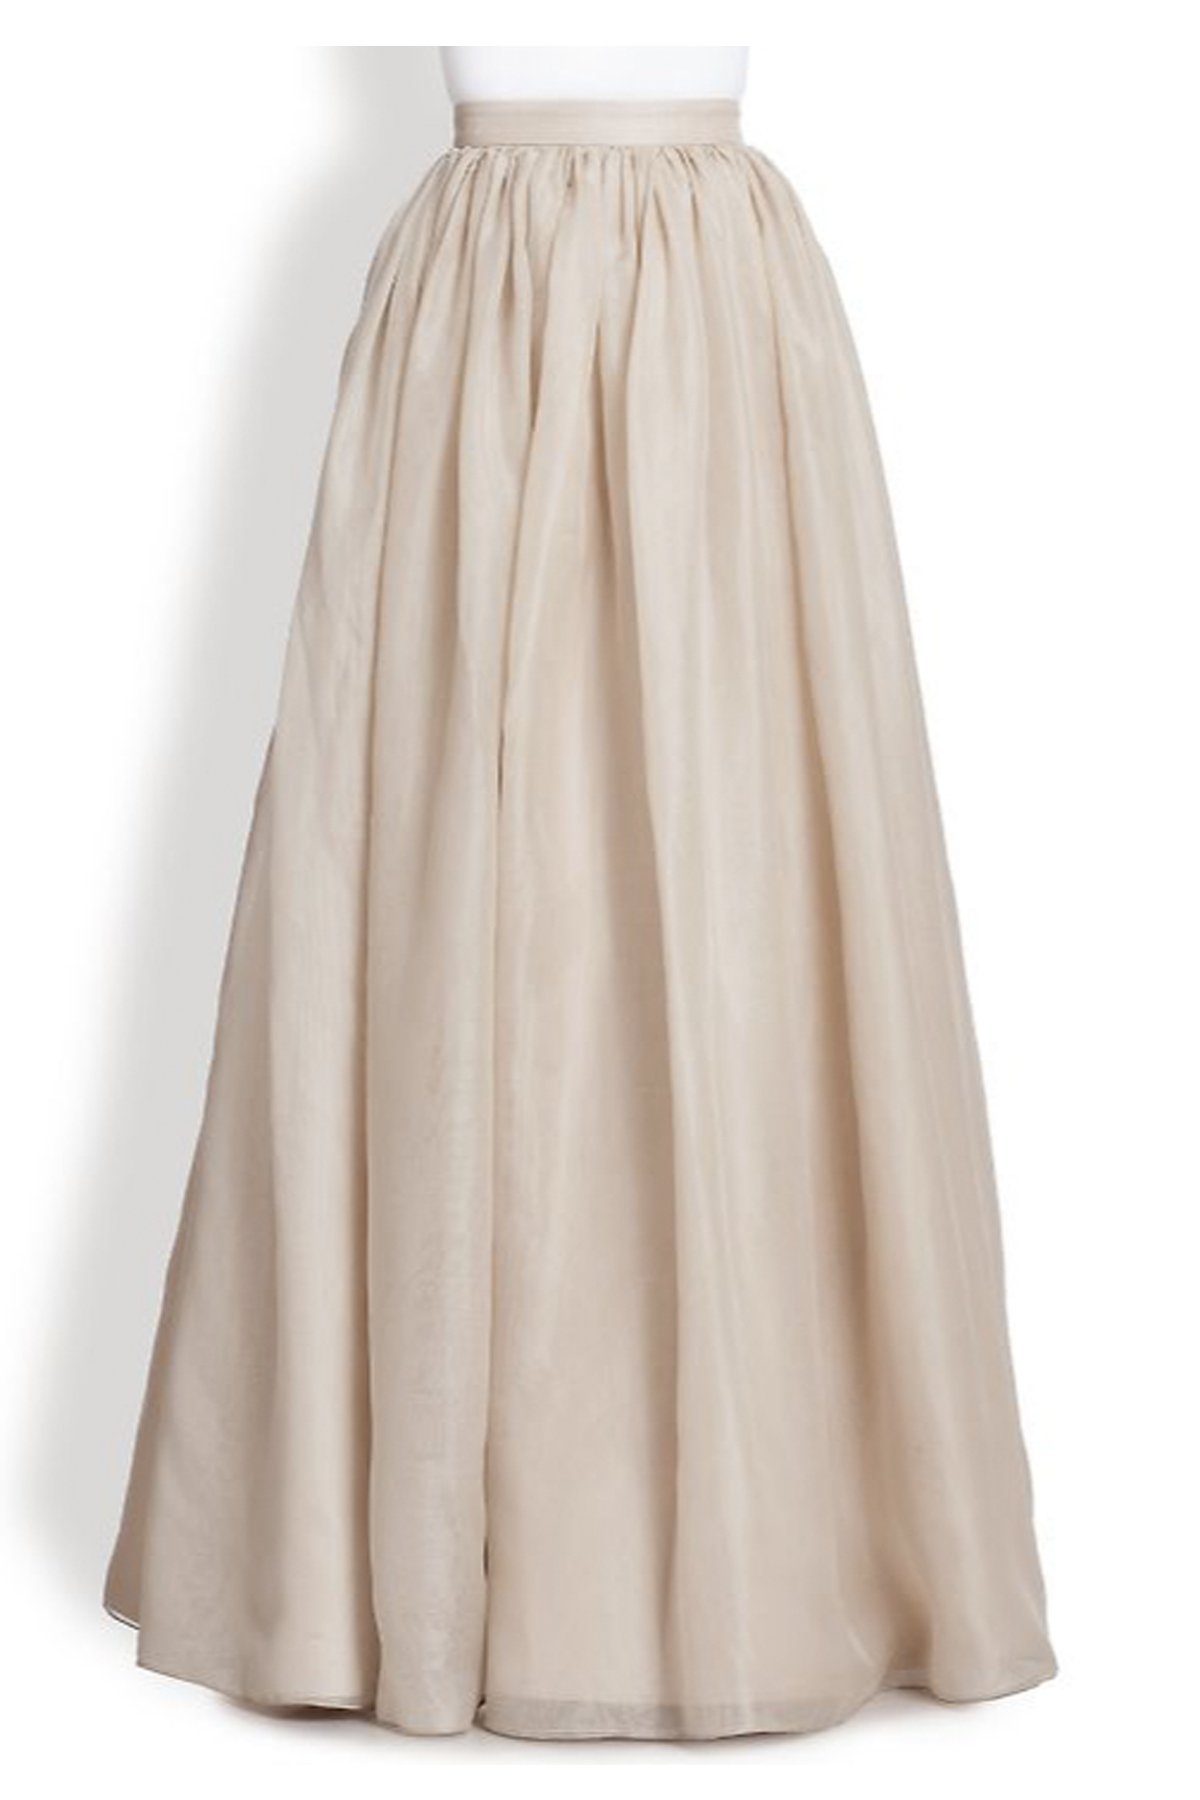 Plus Size Ivory Chiffon Off White Flowing Maxi Skirt – Elizabeth's